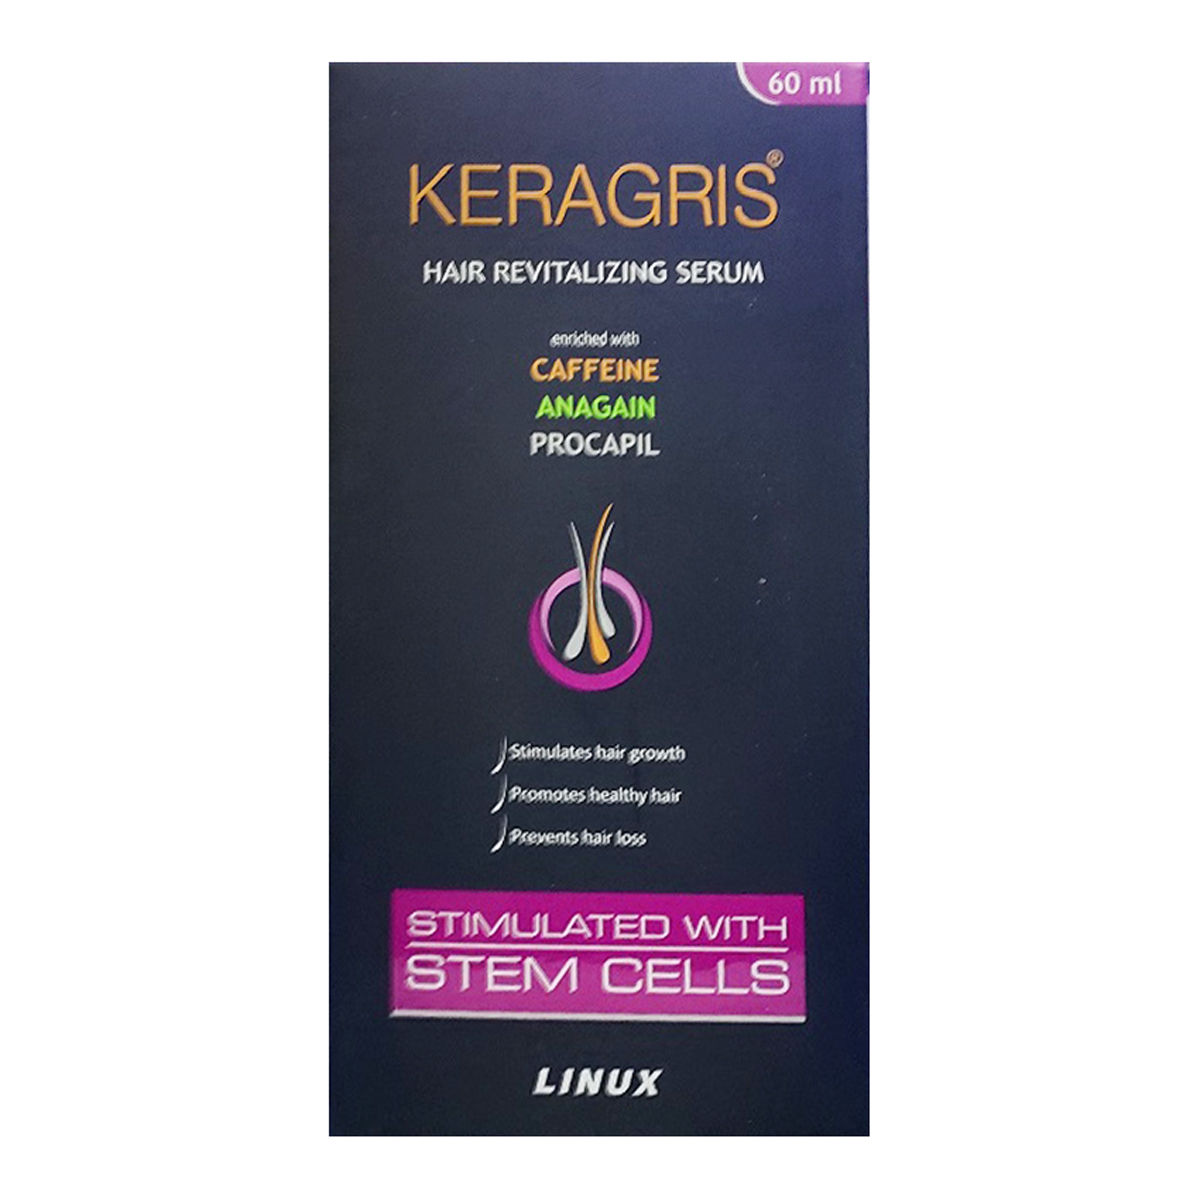 Buy Keragris Hair Revitalizing Serum, 60 ml Online